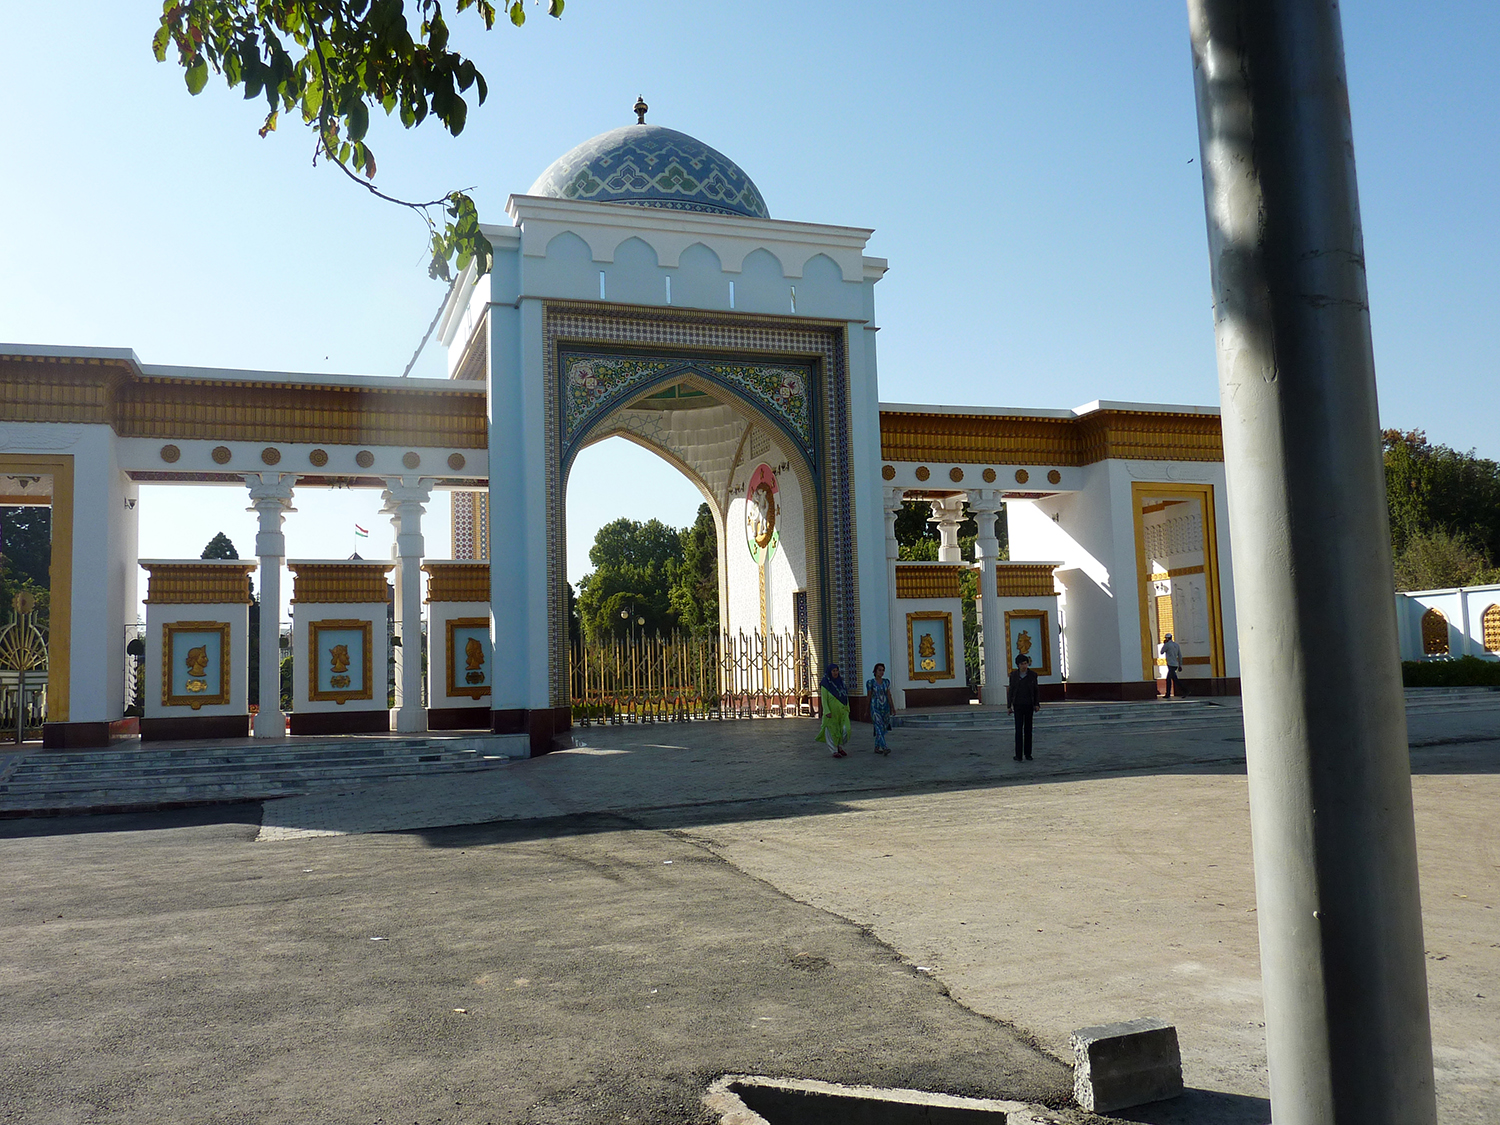 Ghods Eram Garden - View to the entrance gate which is landmark of the park "Darvozai Bogi Iram"